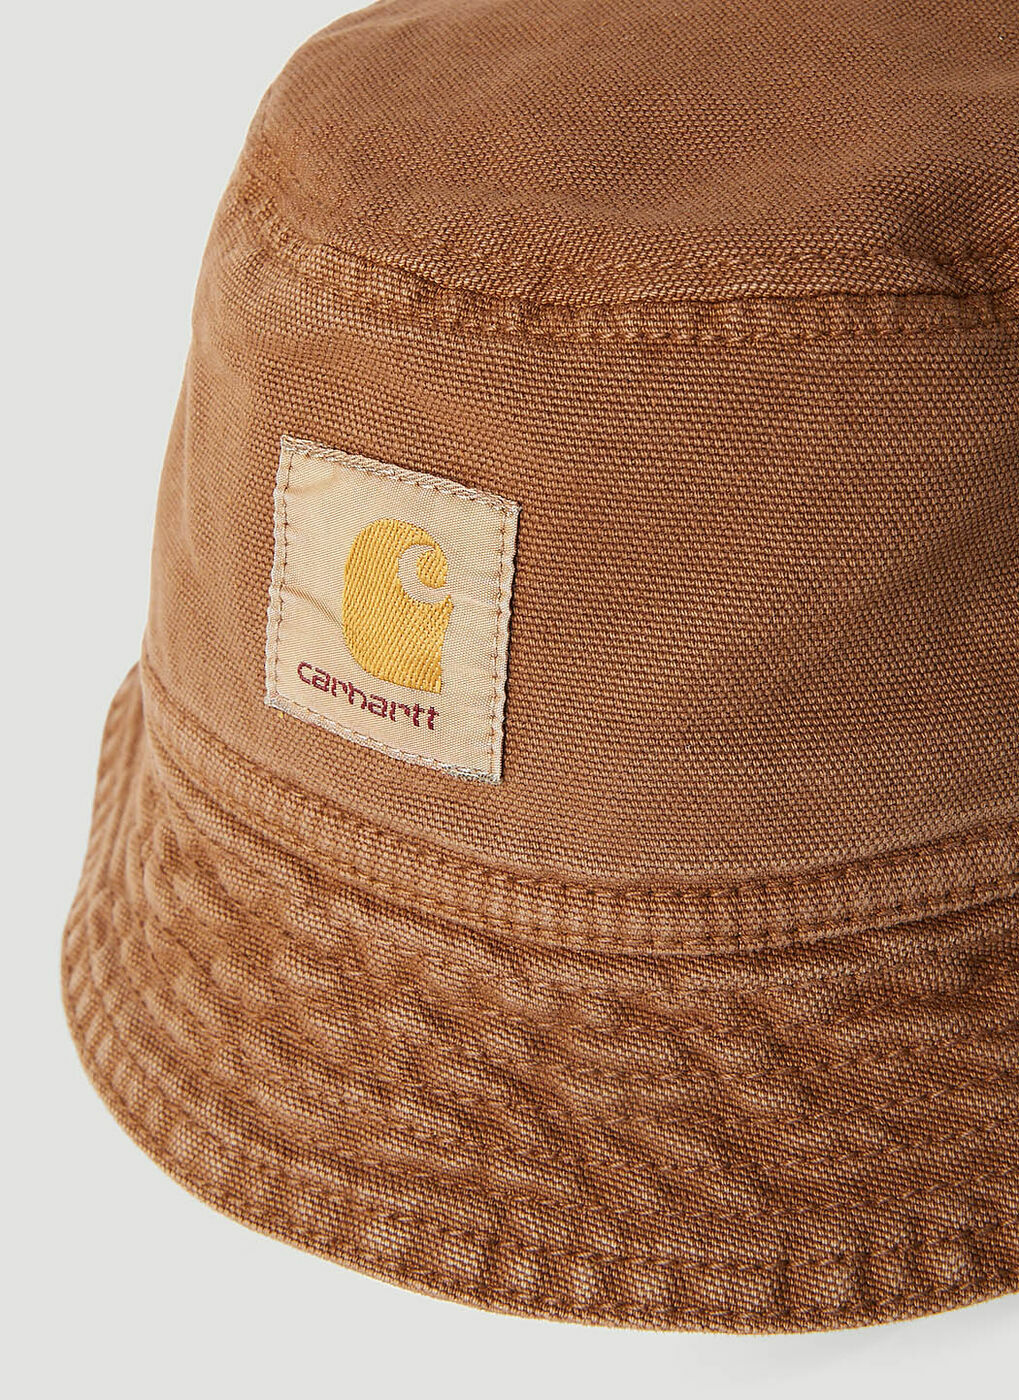 Carhartt WIP - Bayfield Bucket Hat in Brown Carhartt WIP